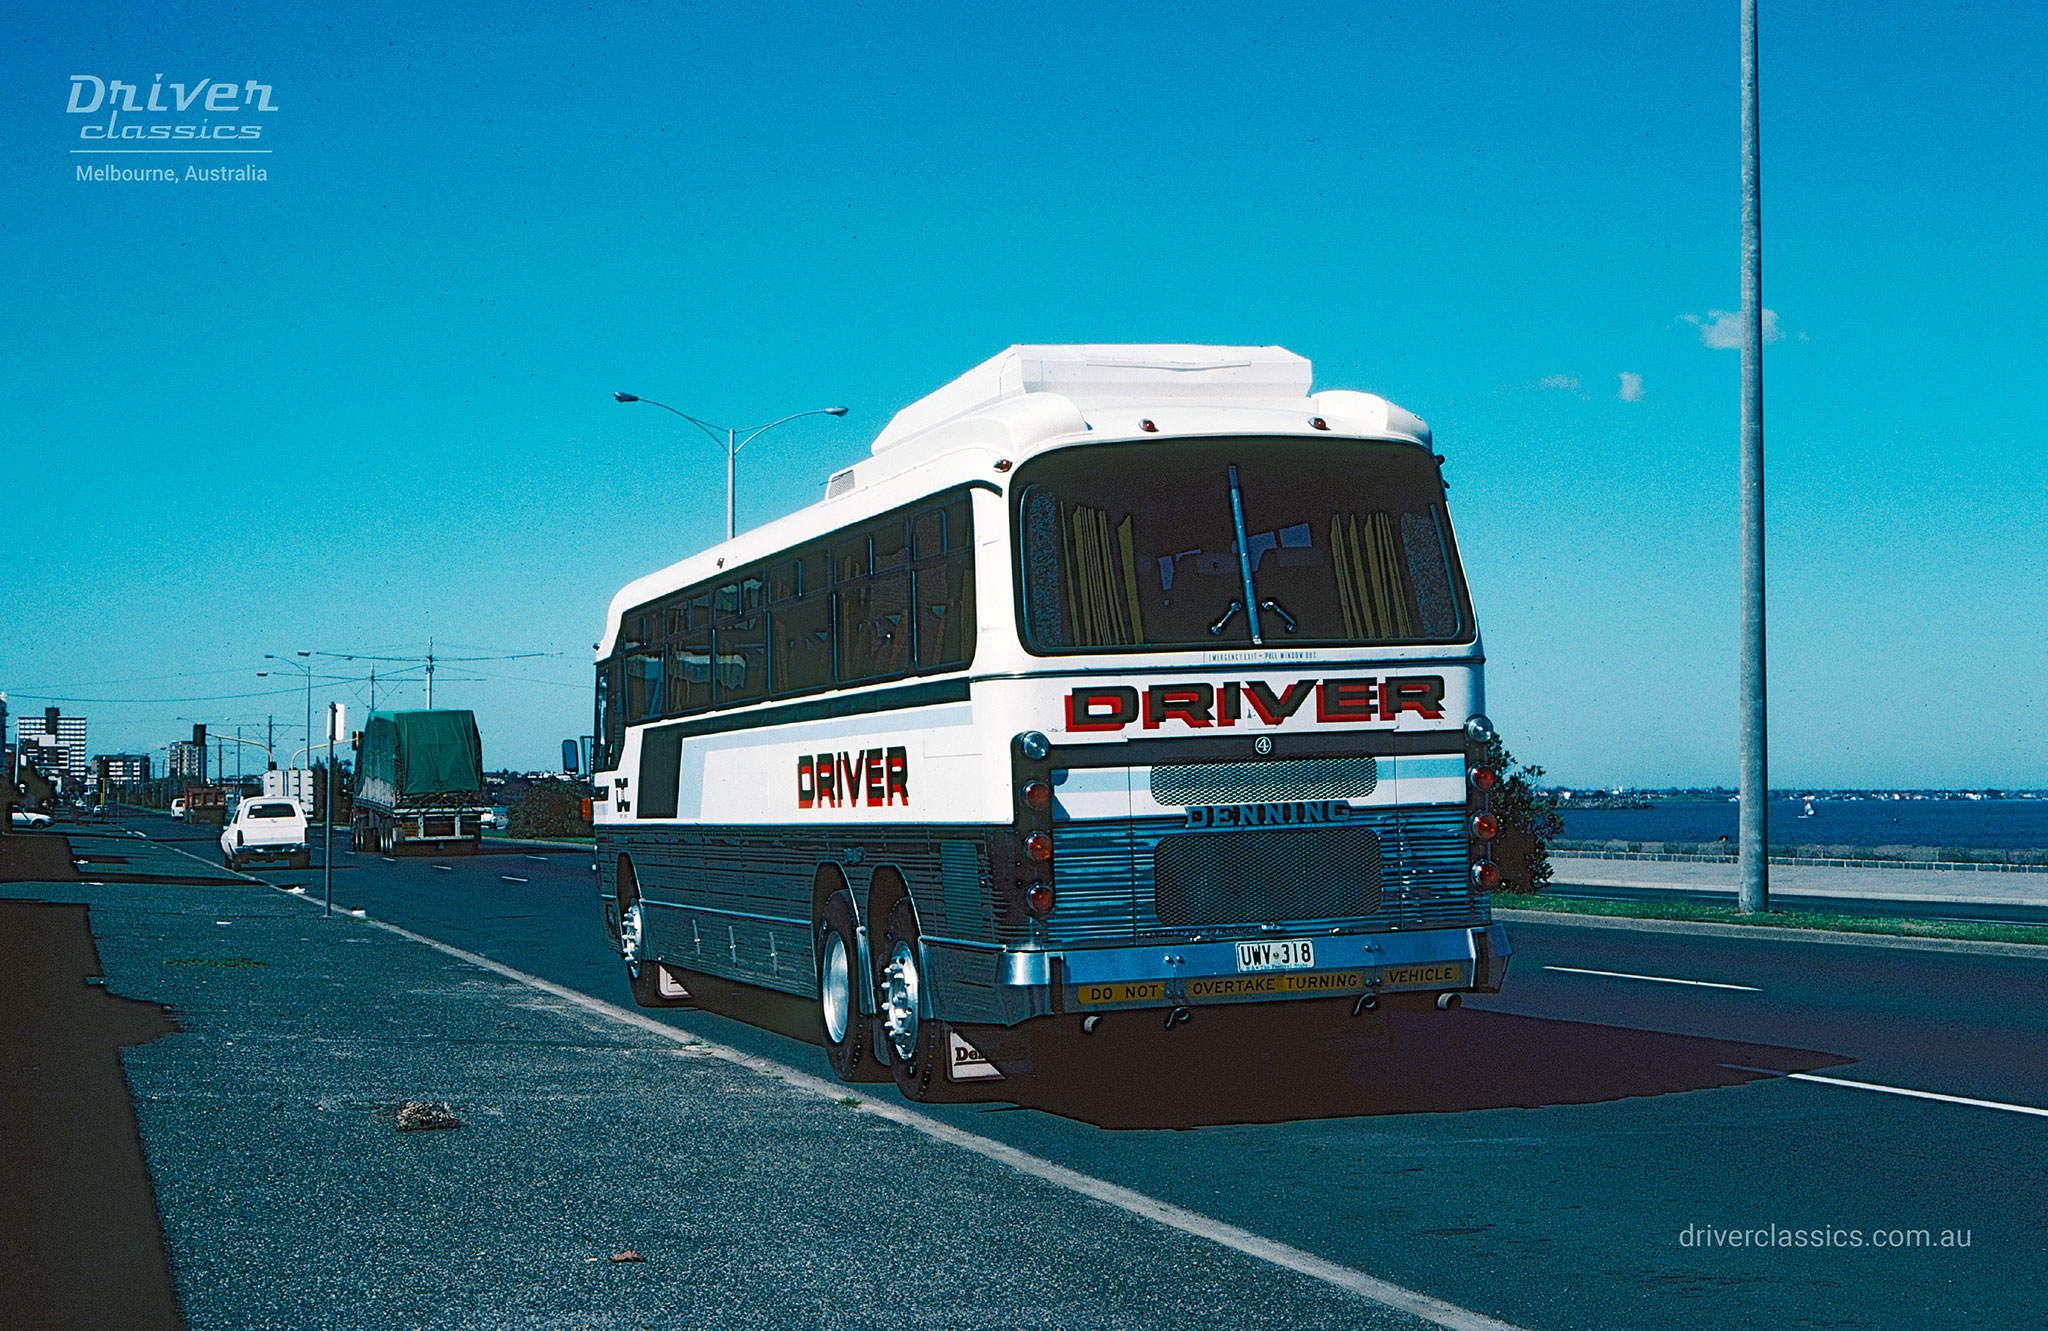 GM Denning DenAir Mono Bus, 1983 model, Lancefield VIC, original livery. Photo taken August 1983 at Middle Park VIctoria.